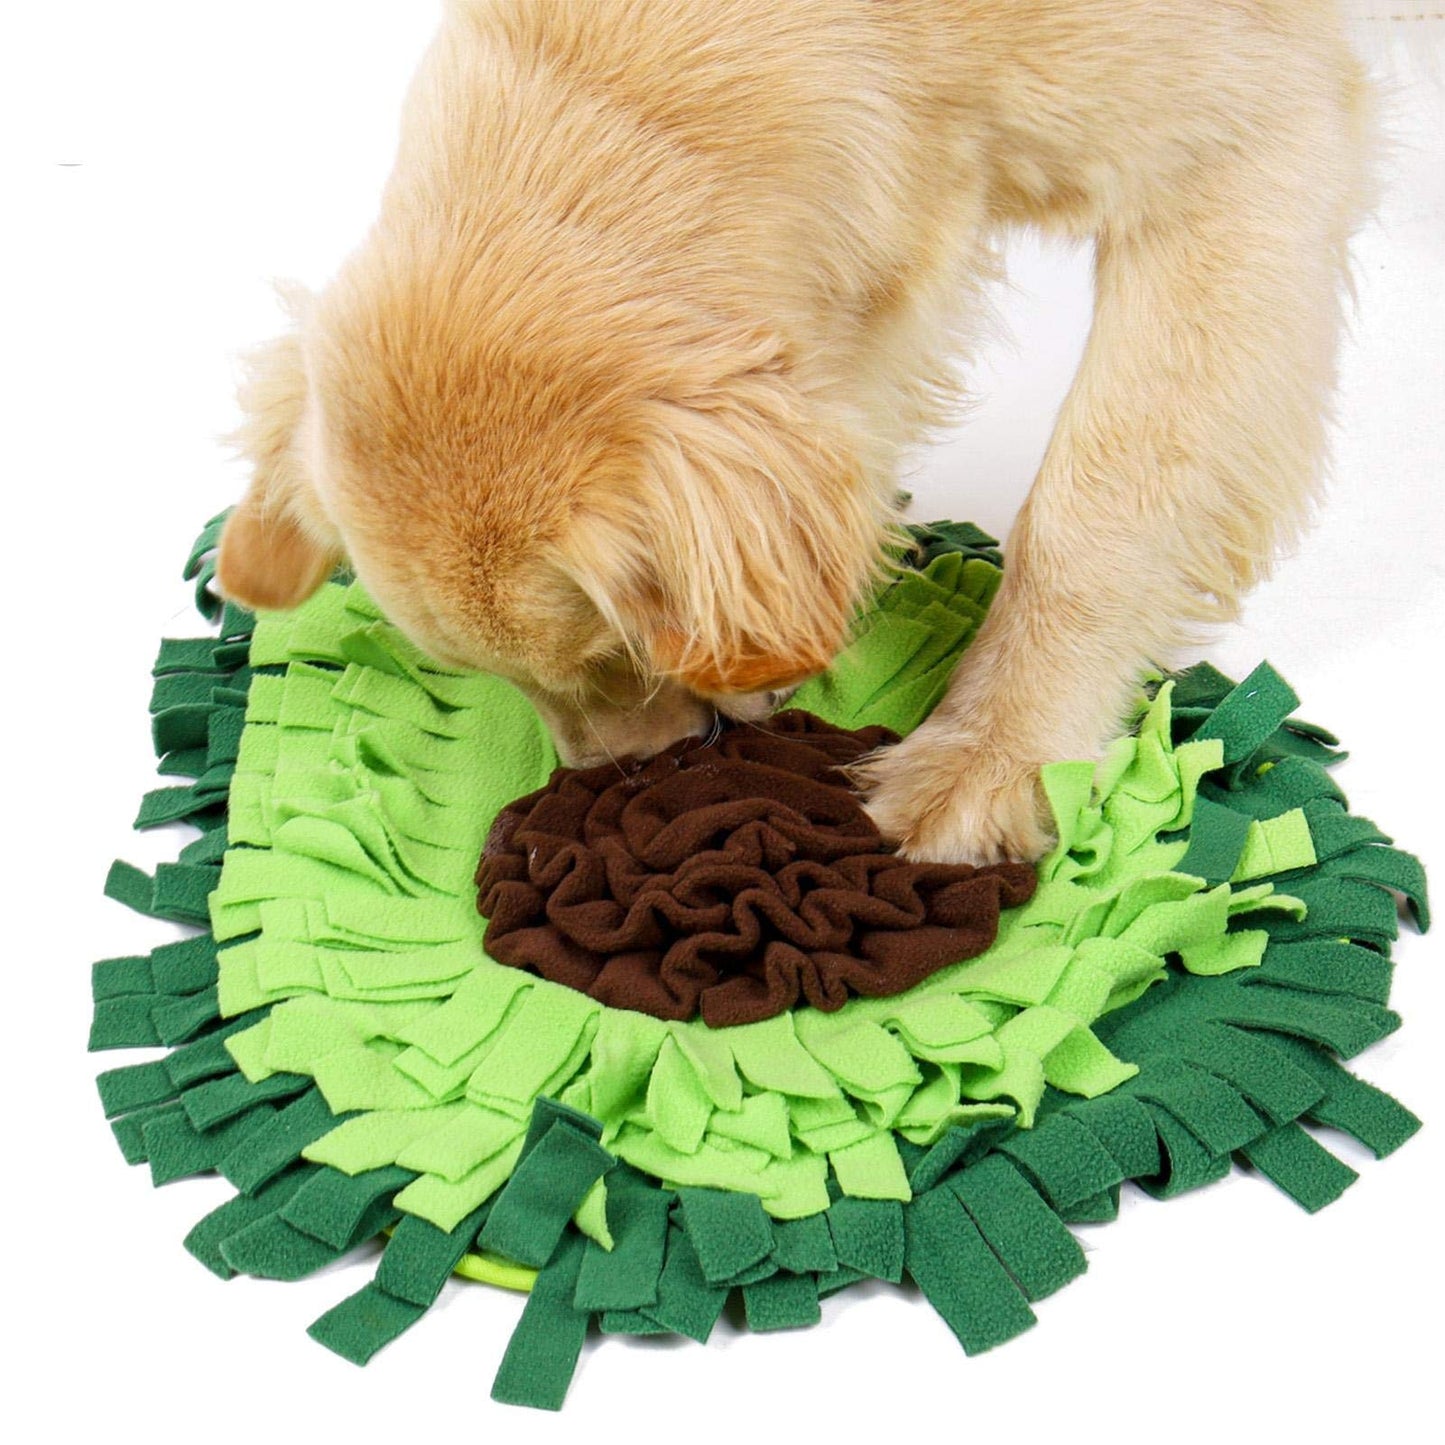 Dog Sniffing Mat Dog Puzzle Toy Pet Snack Feeding Mat